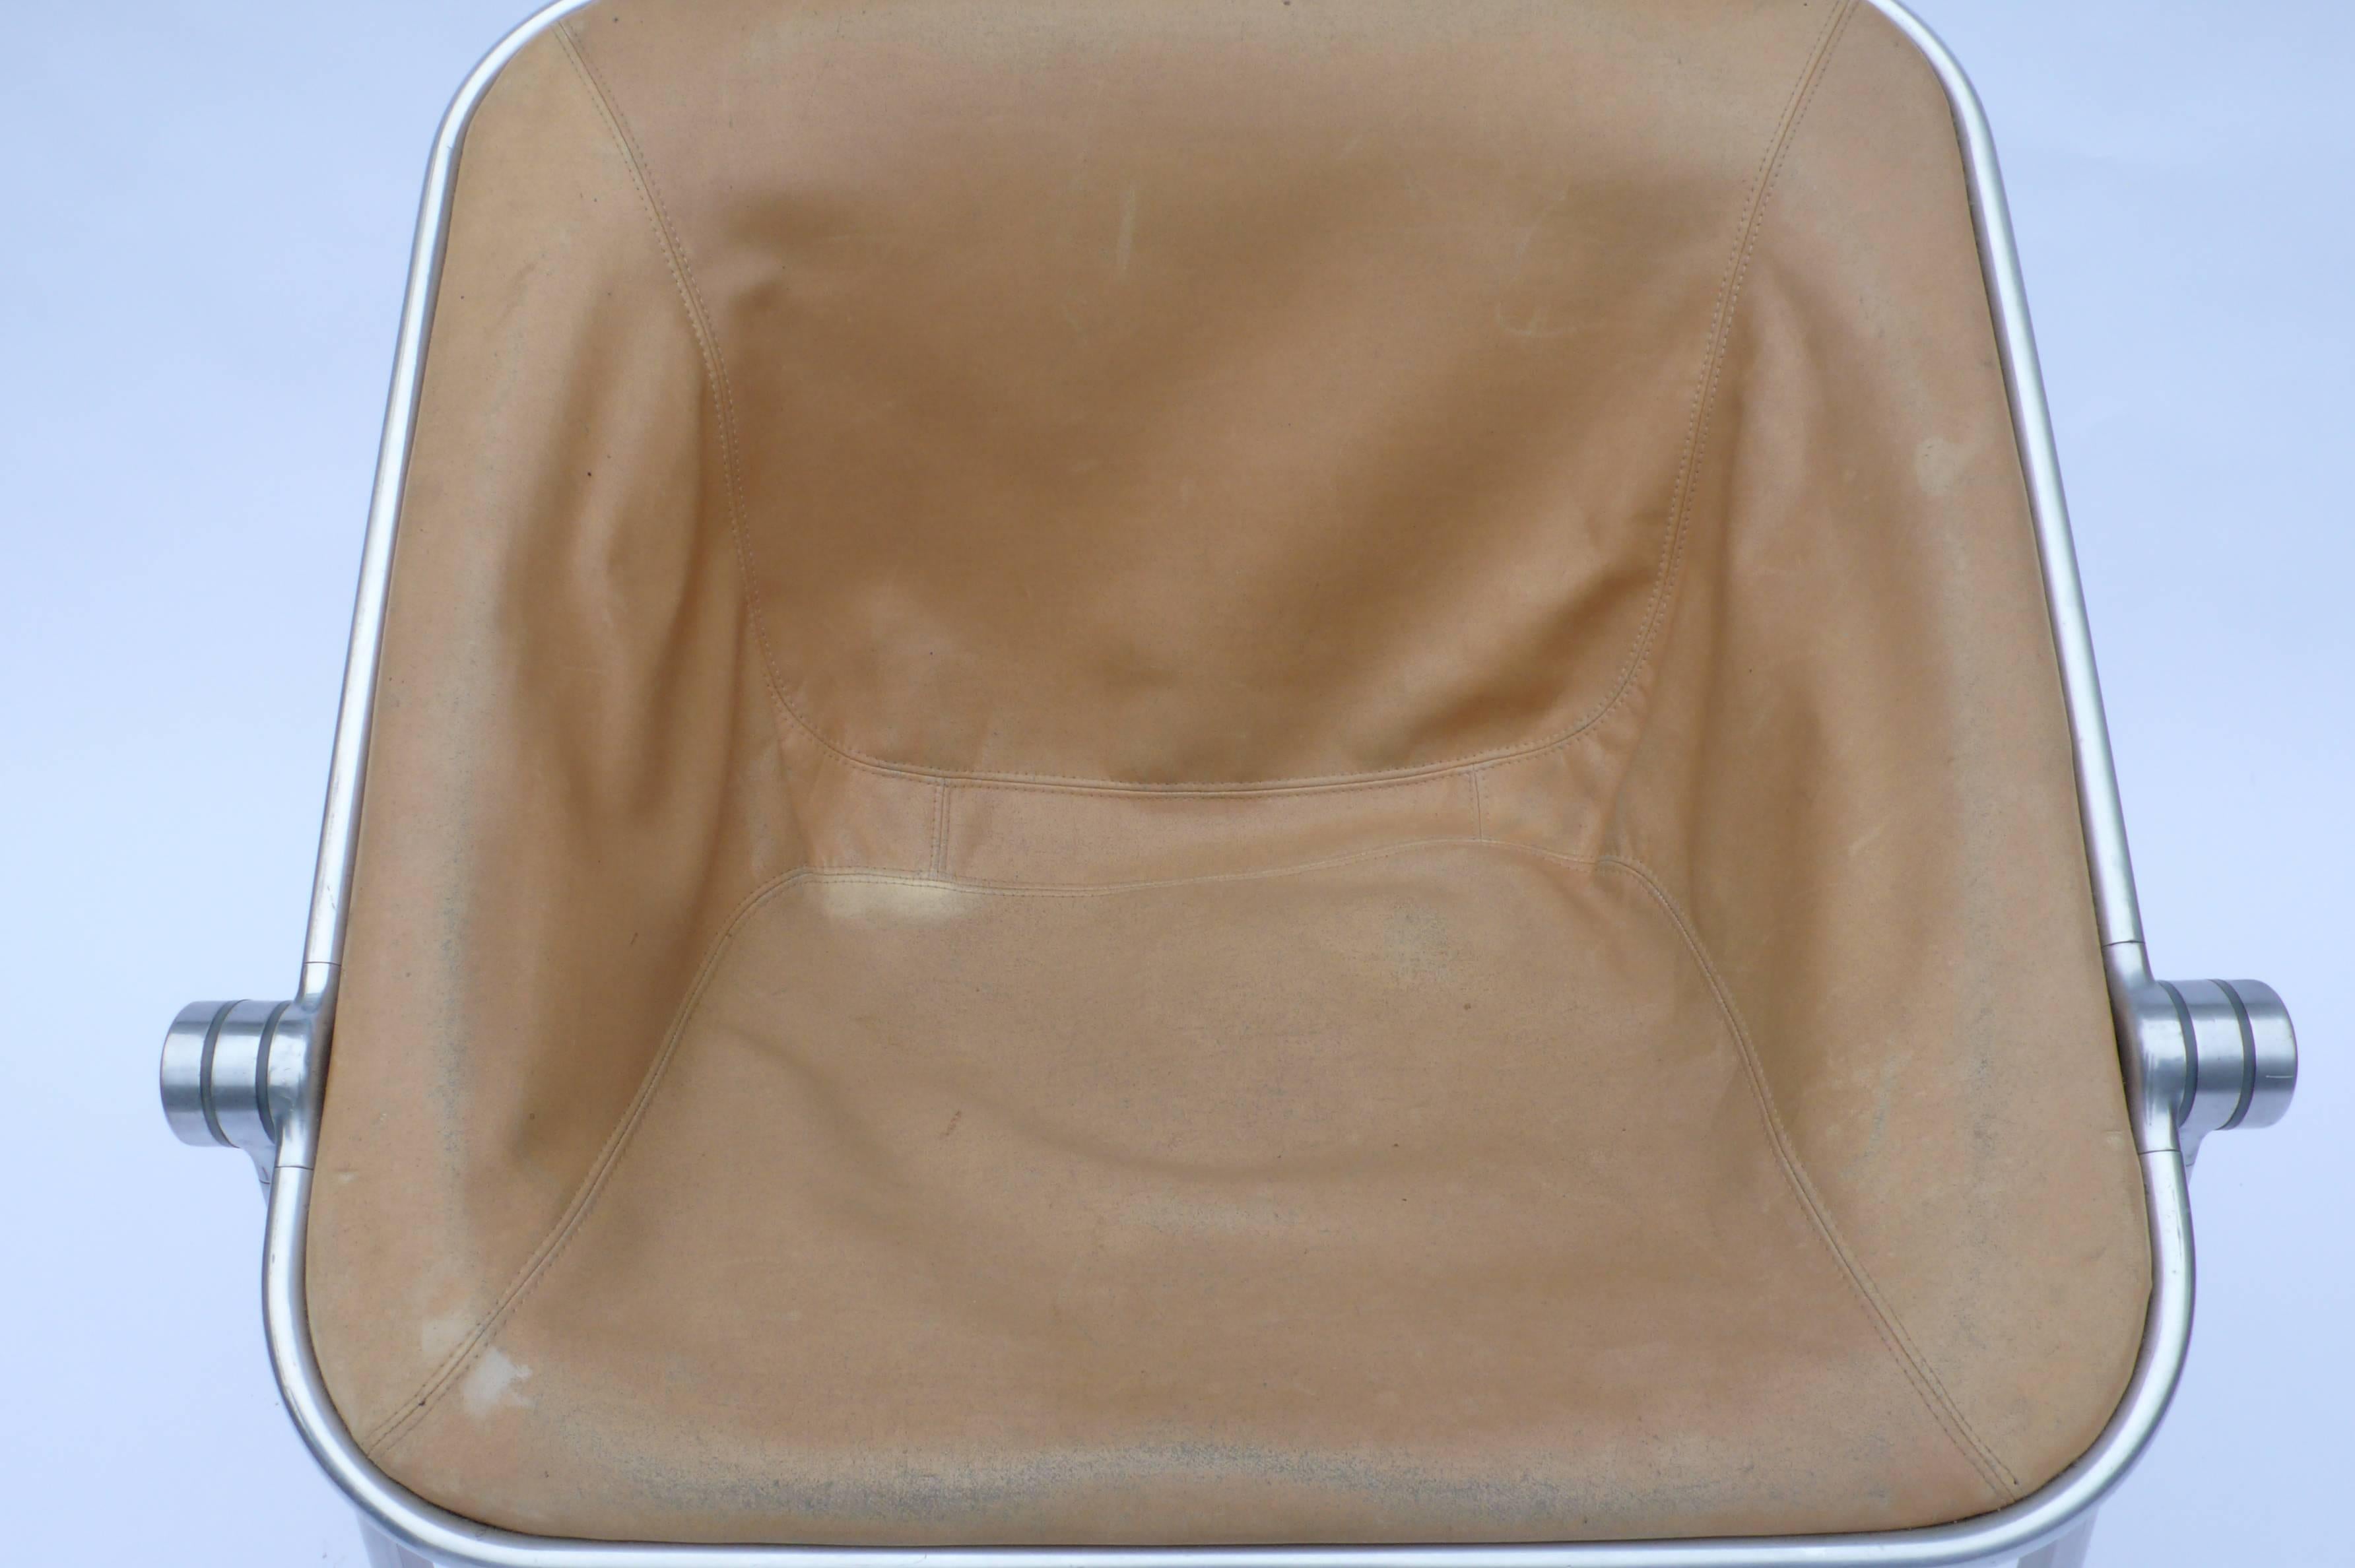 Italian Plona Folding Chair by Giancarlo Piretti for Castelli